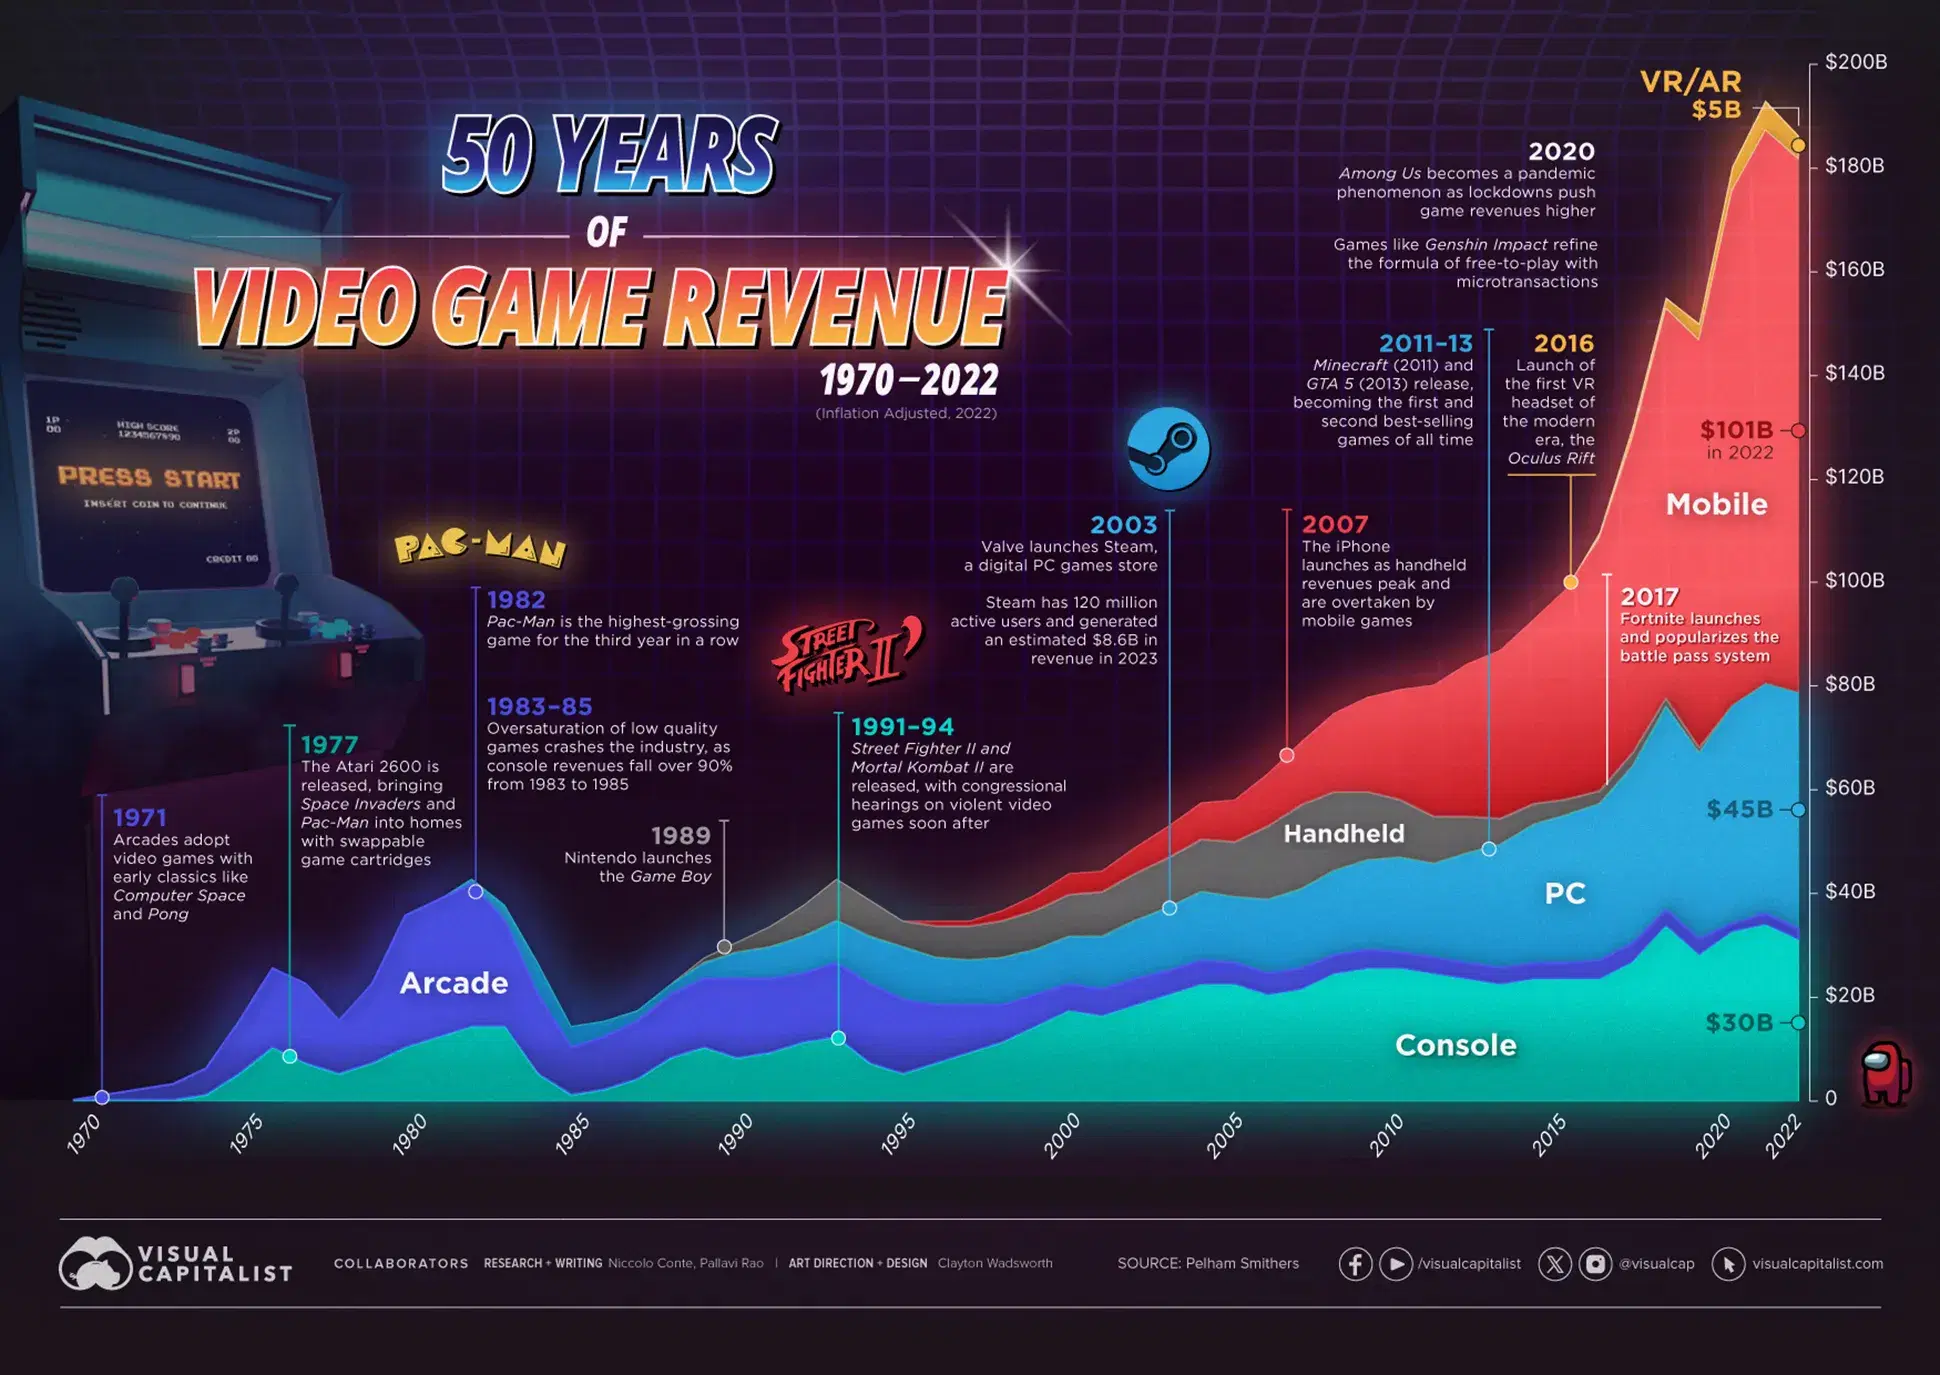 50 Years of Video Game Industry Revenues, by Platform